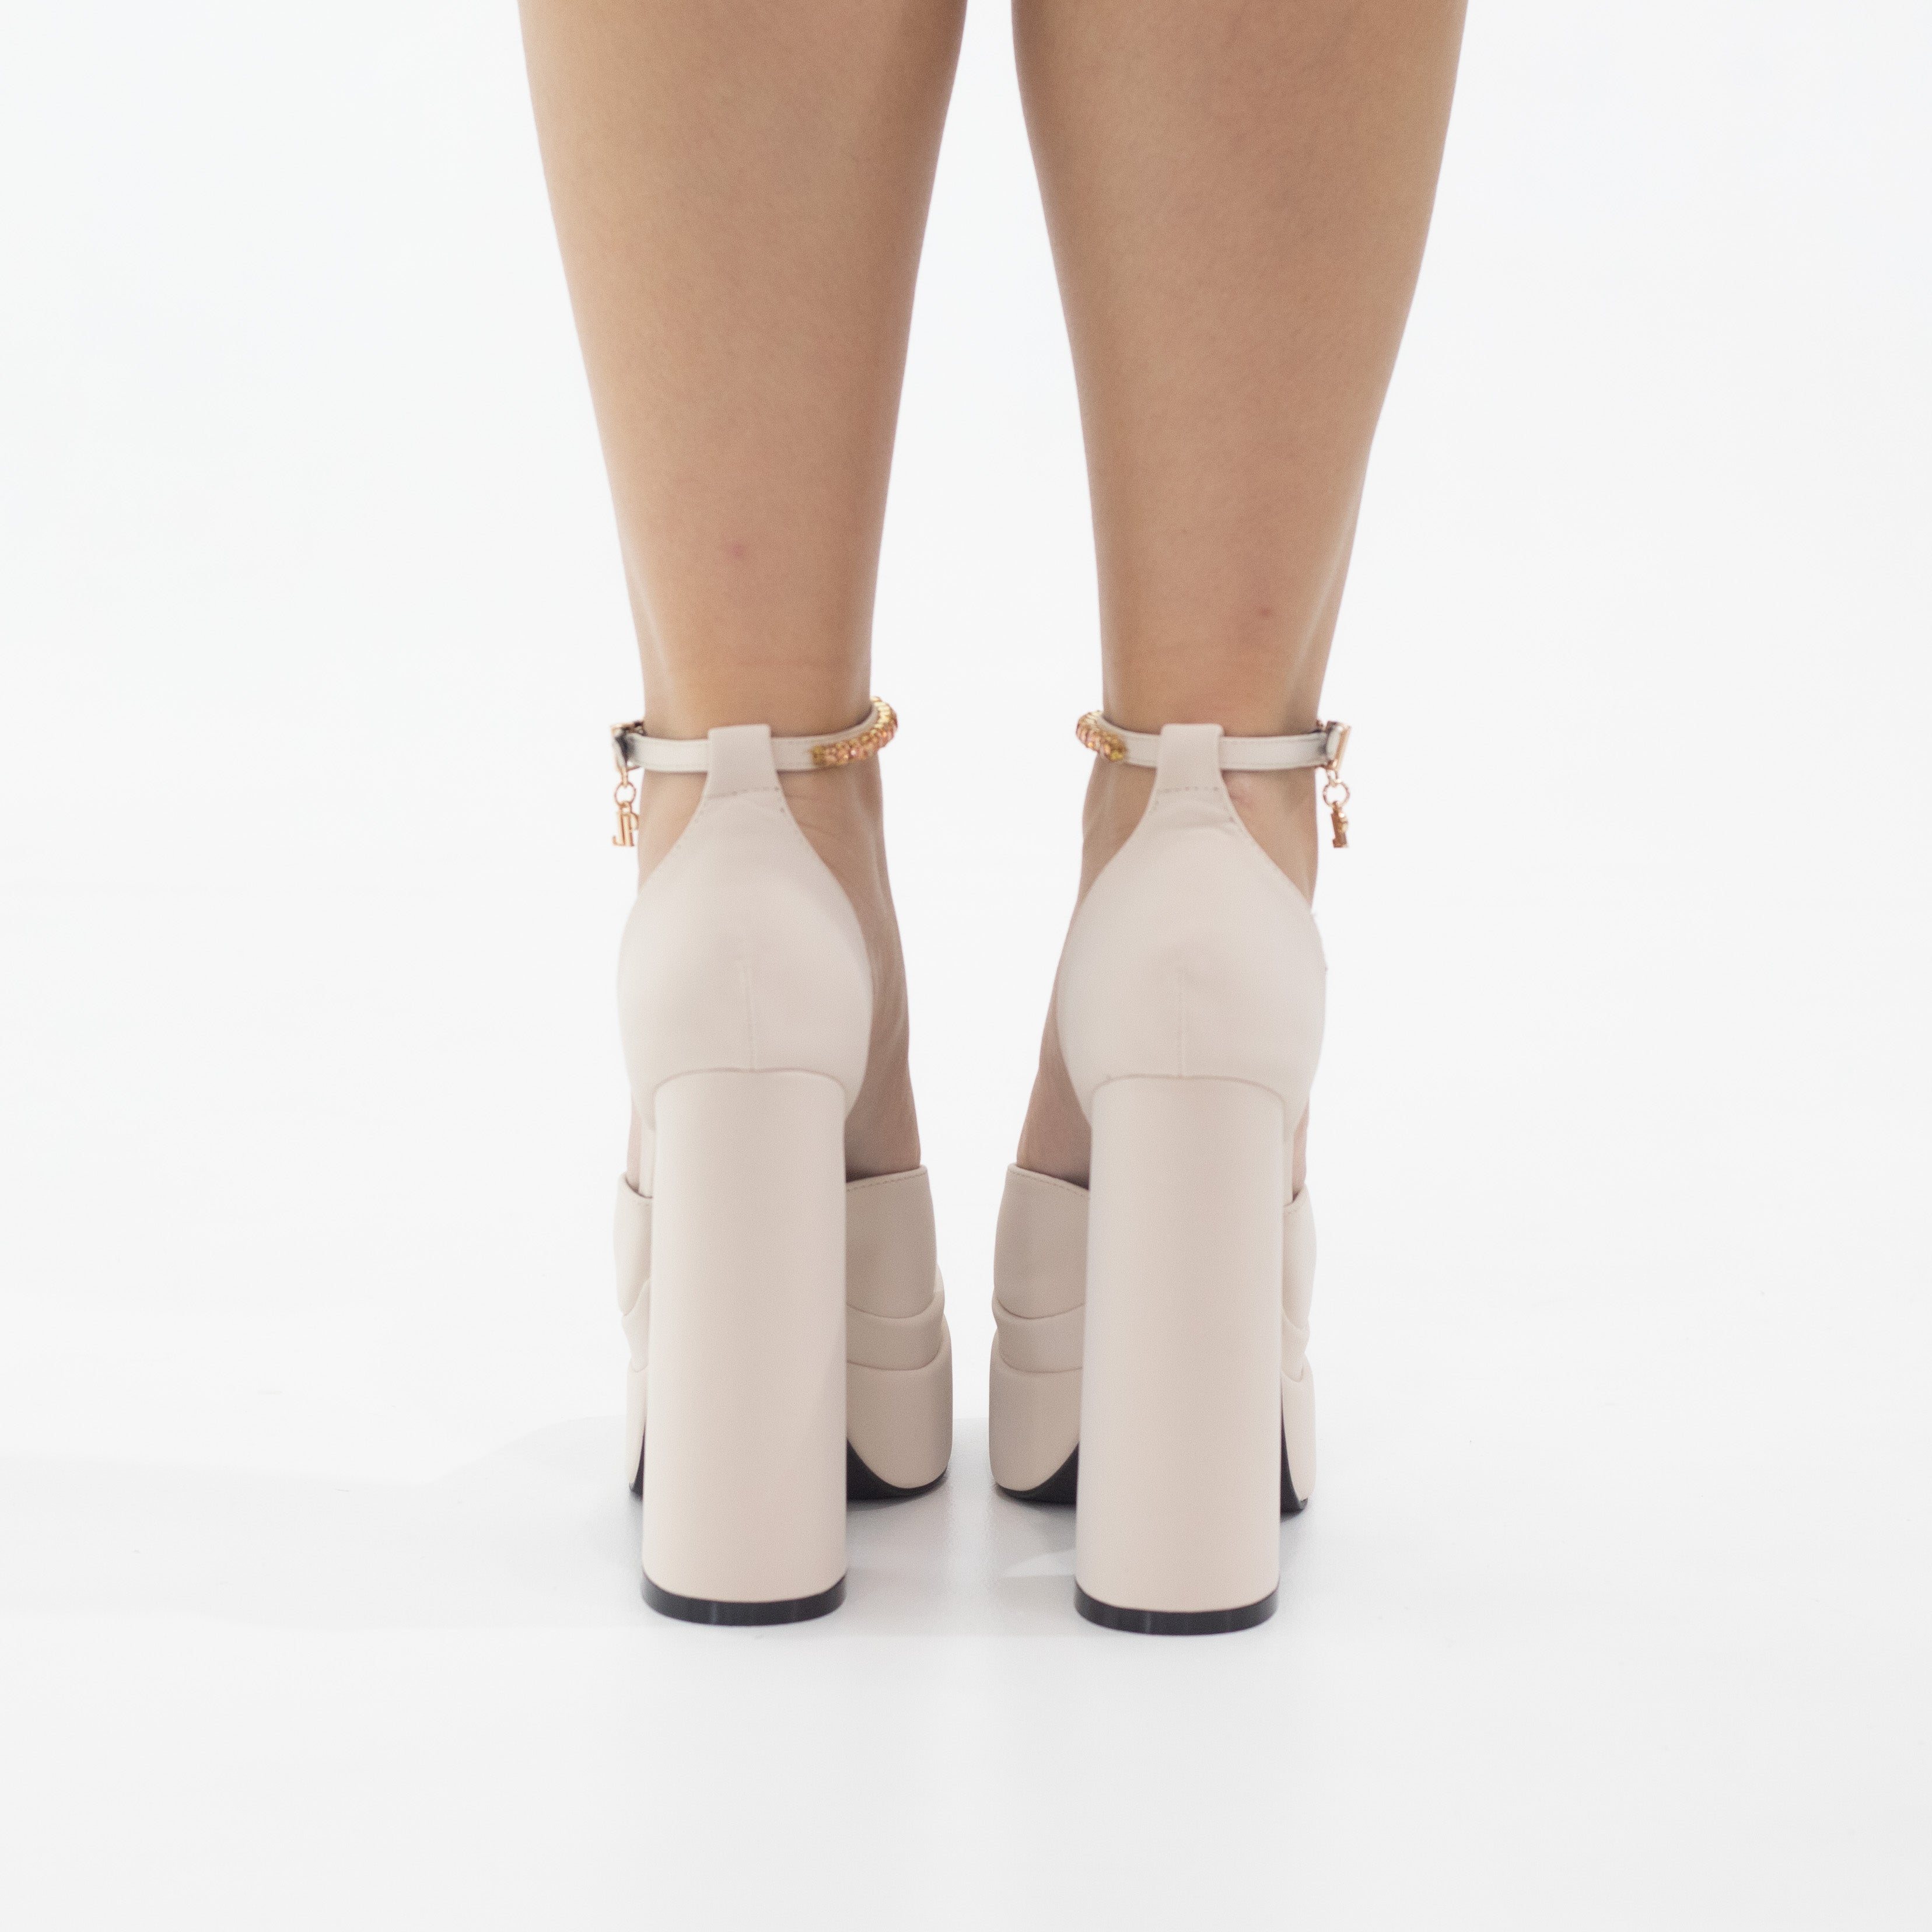 Trixie open waist high 14.5cm heel platform nude